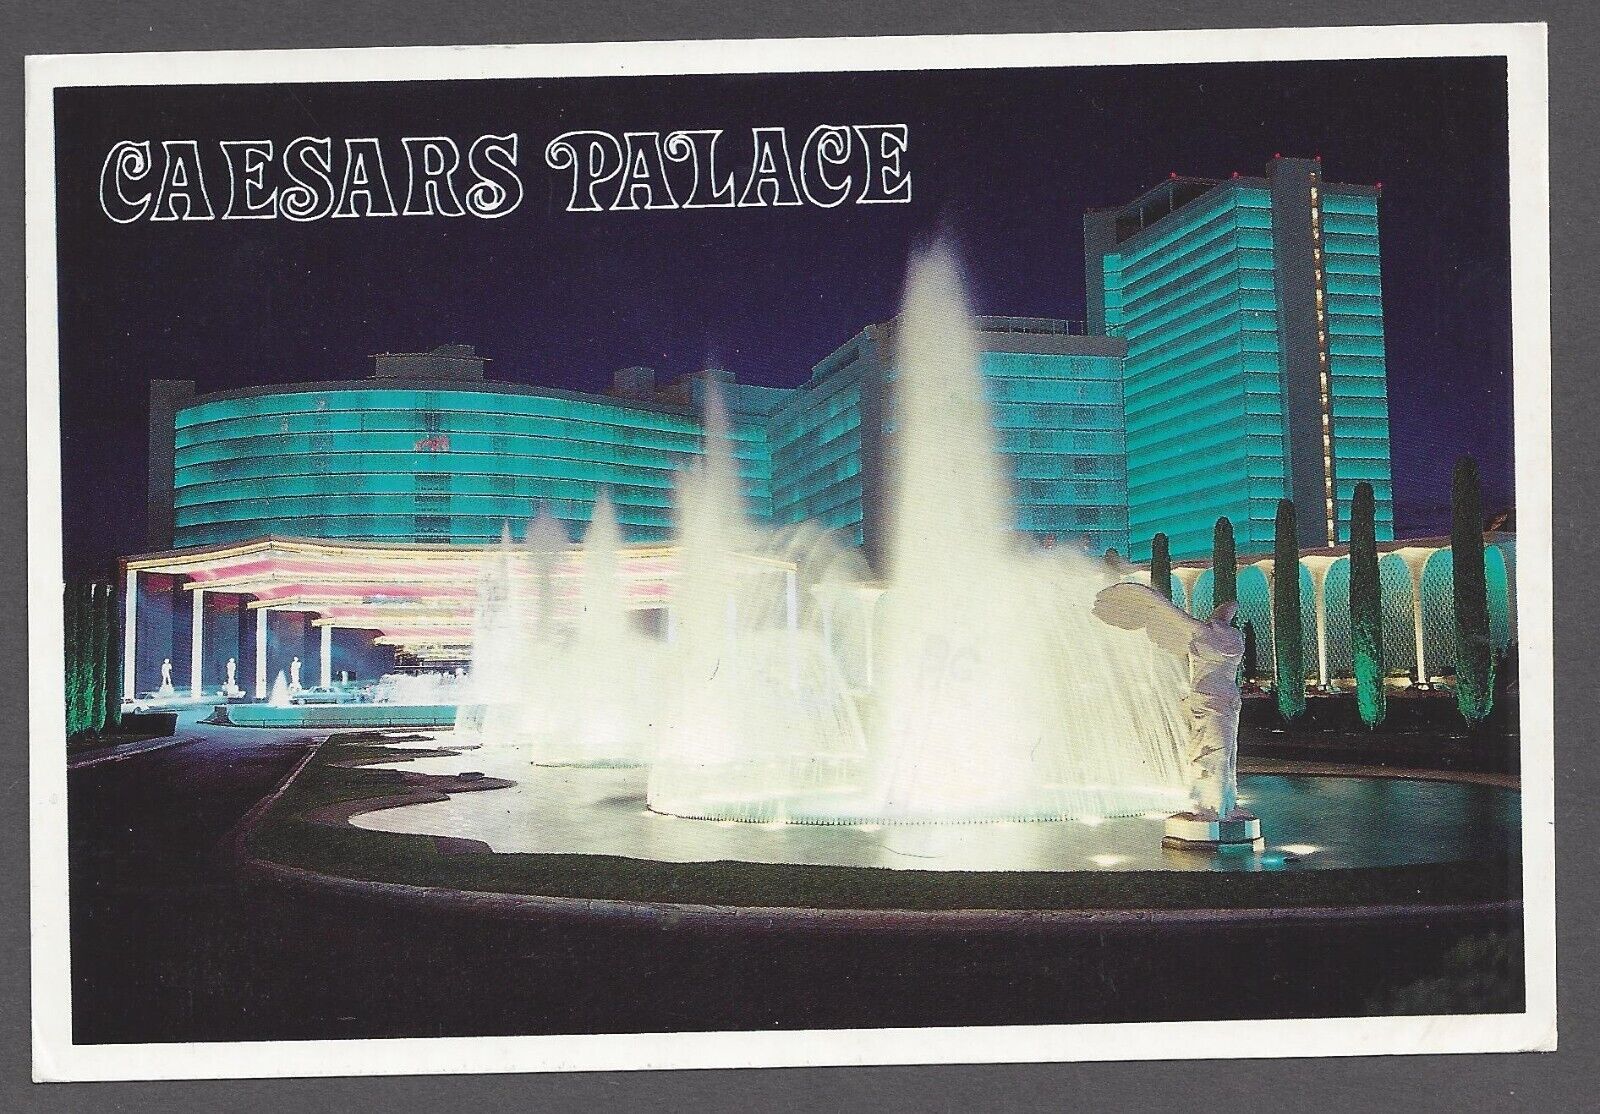 Caesars Palace Las Vegas Nevada Postcard Night View Fountain Hotel Lit Up Statue